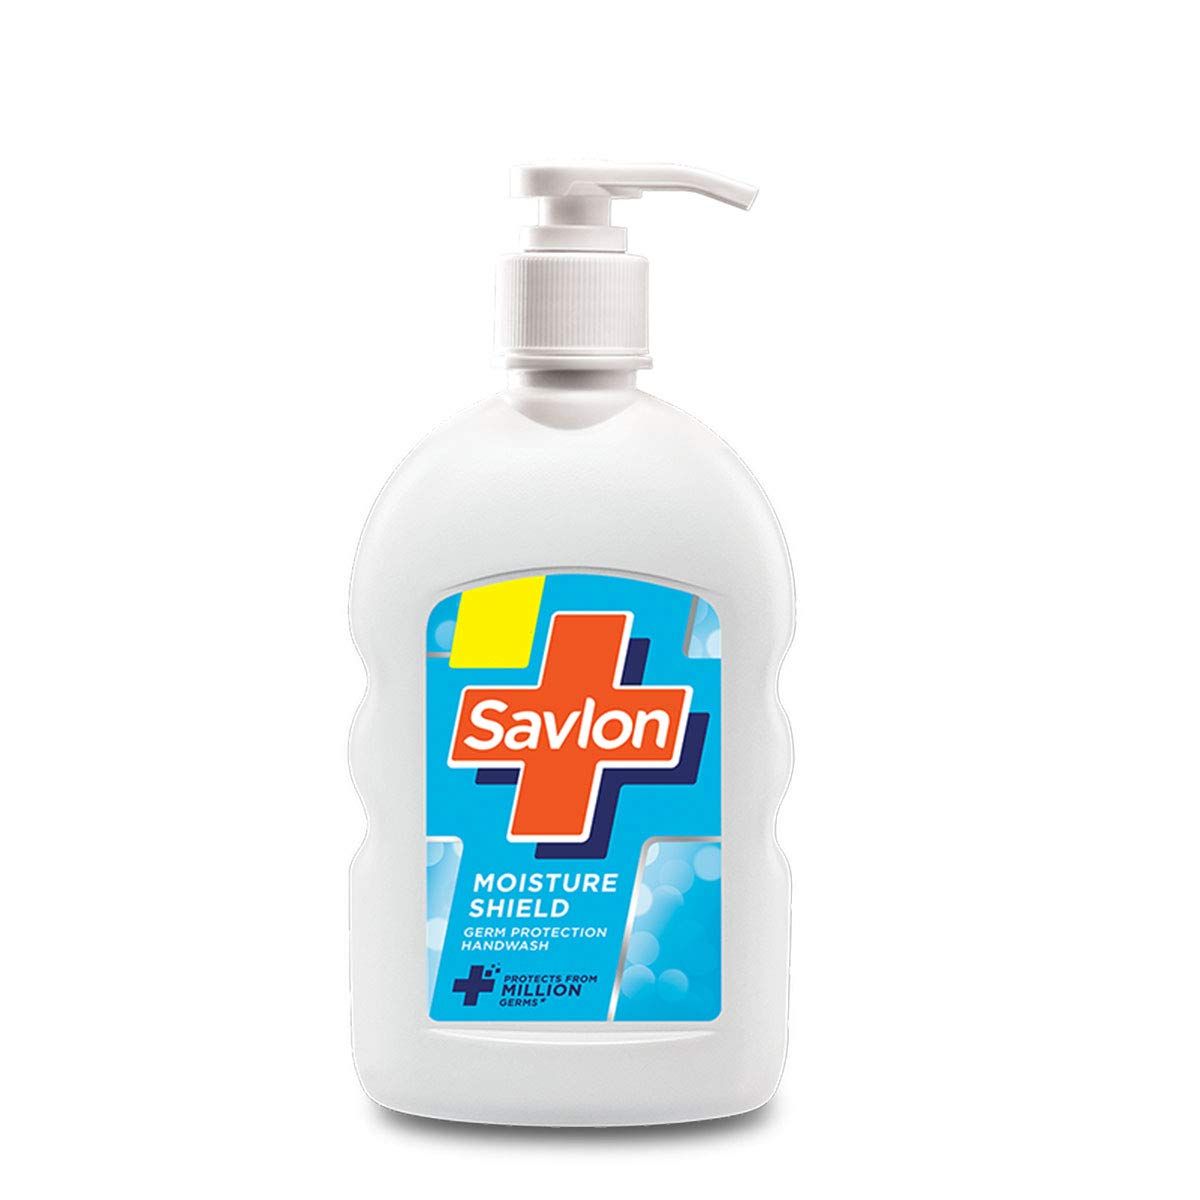 Savlon Moisture Shield Germ Protection Handwash, 200 ml, Pack of 1 